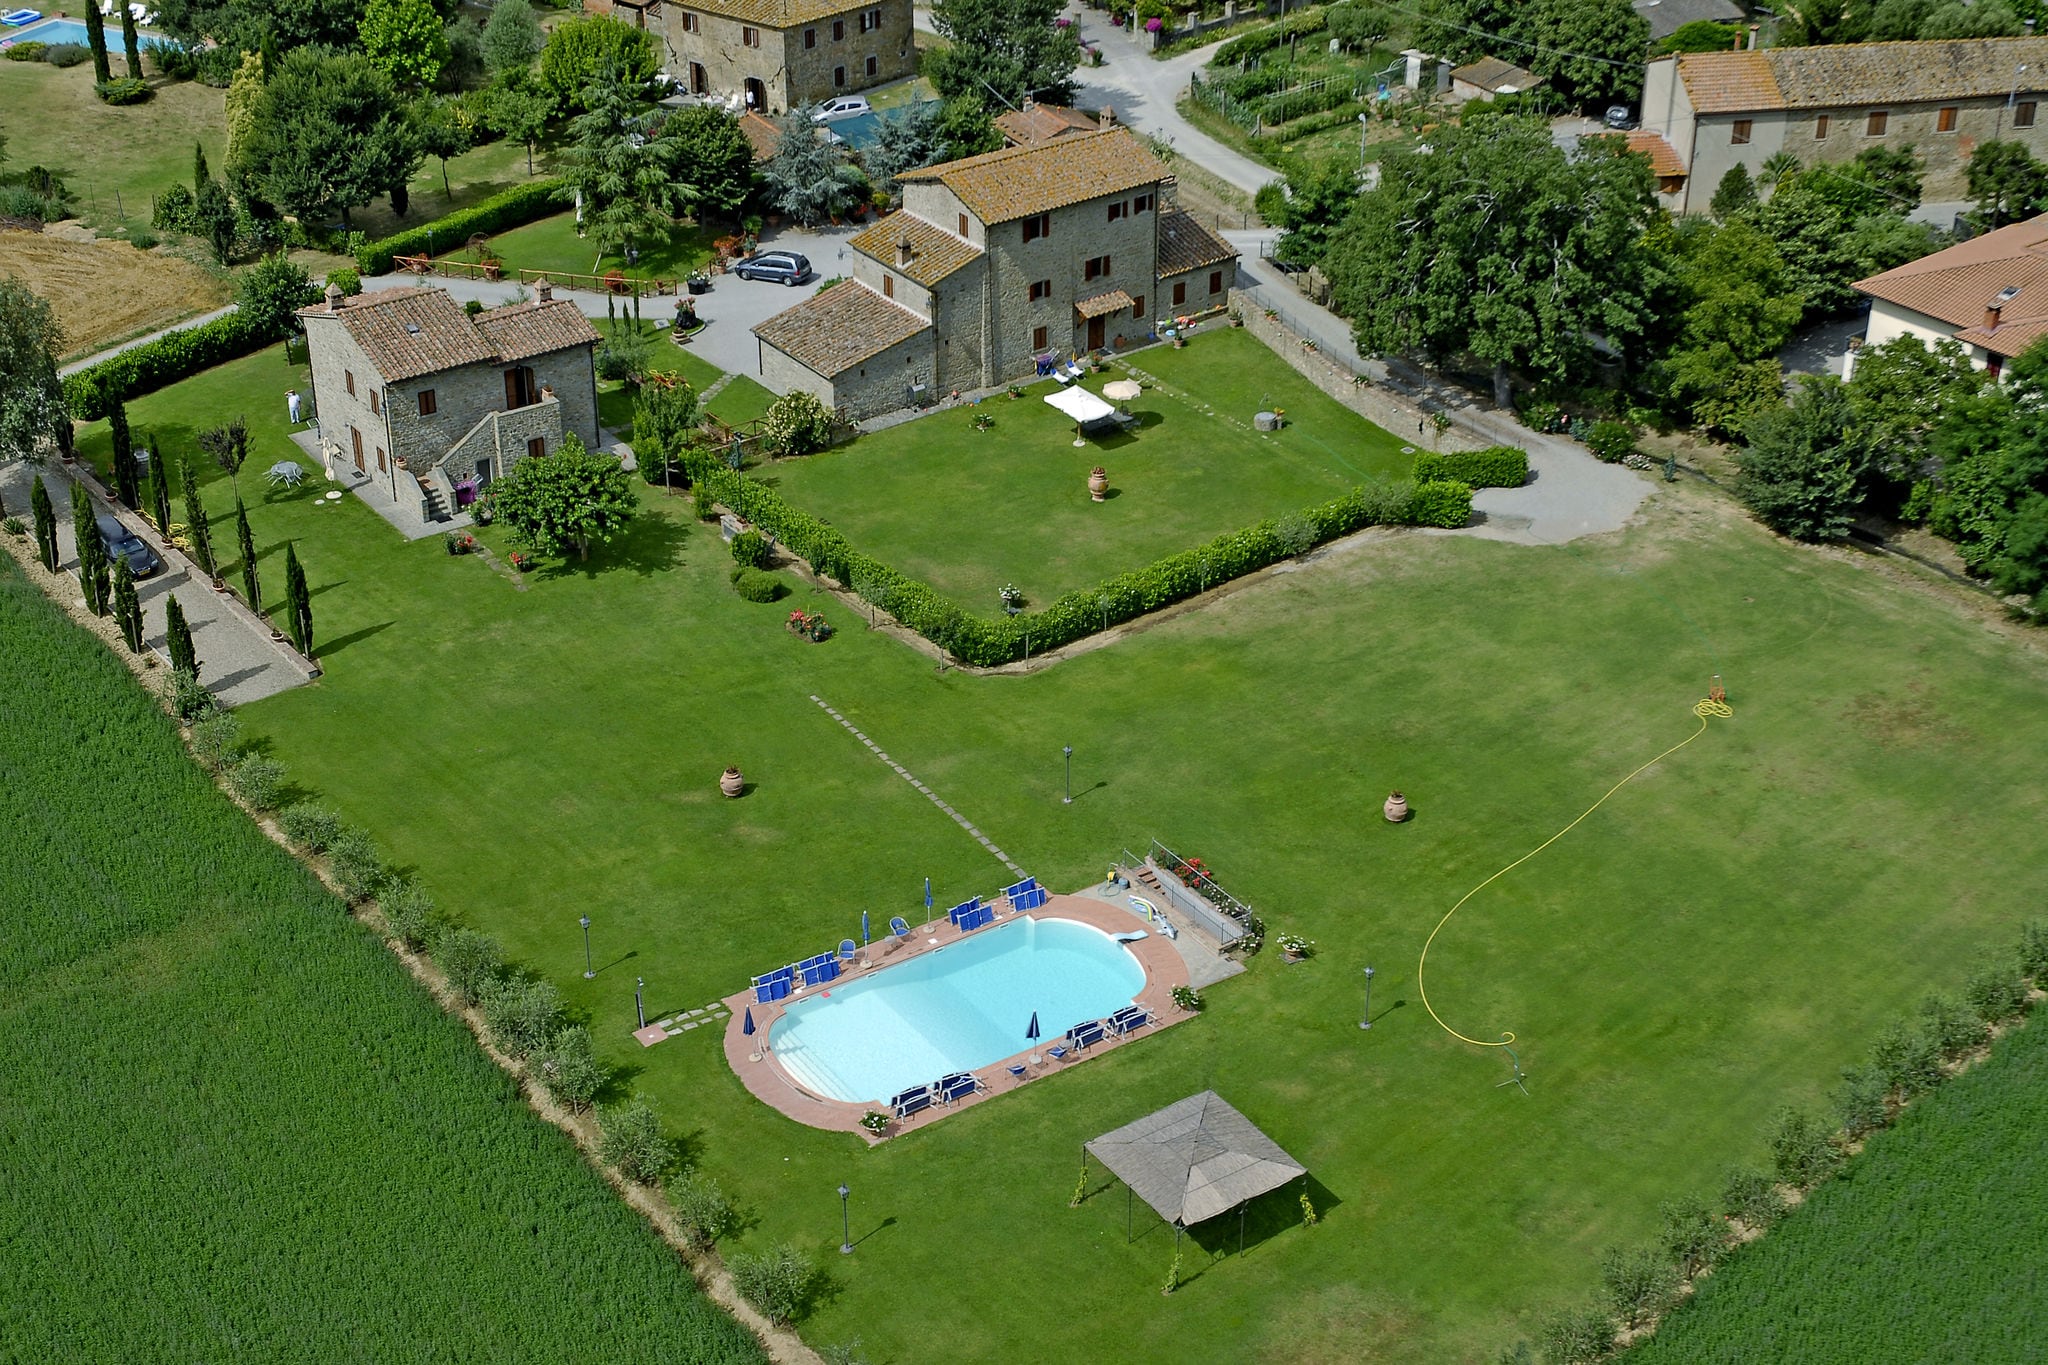 Geräumige Ferienwohnung mit Pool in Cortona, Toskana